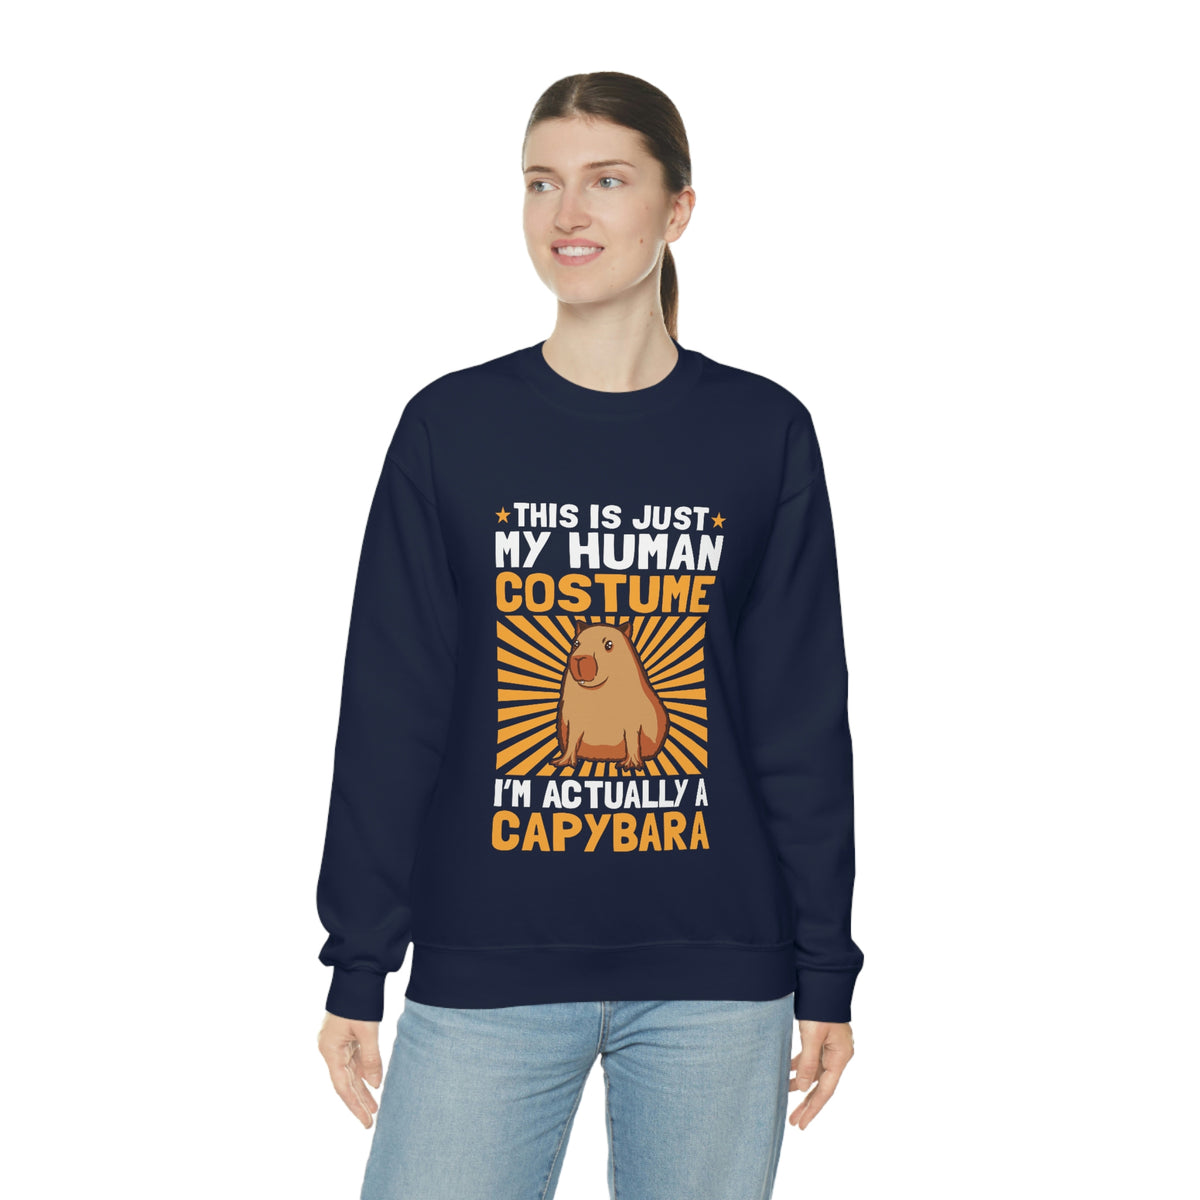 This is my human costume - Unisex Sweatshirt